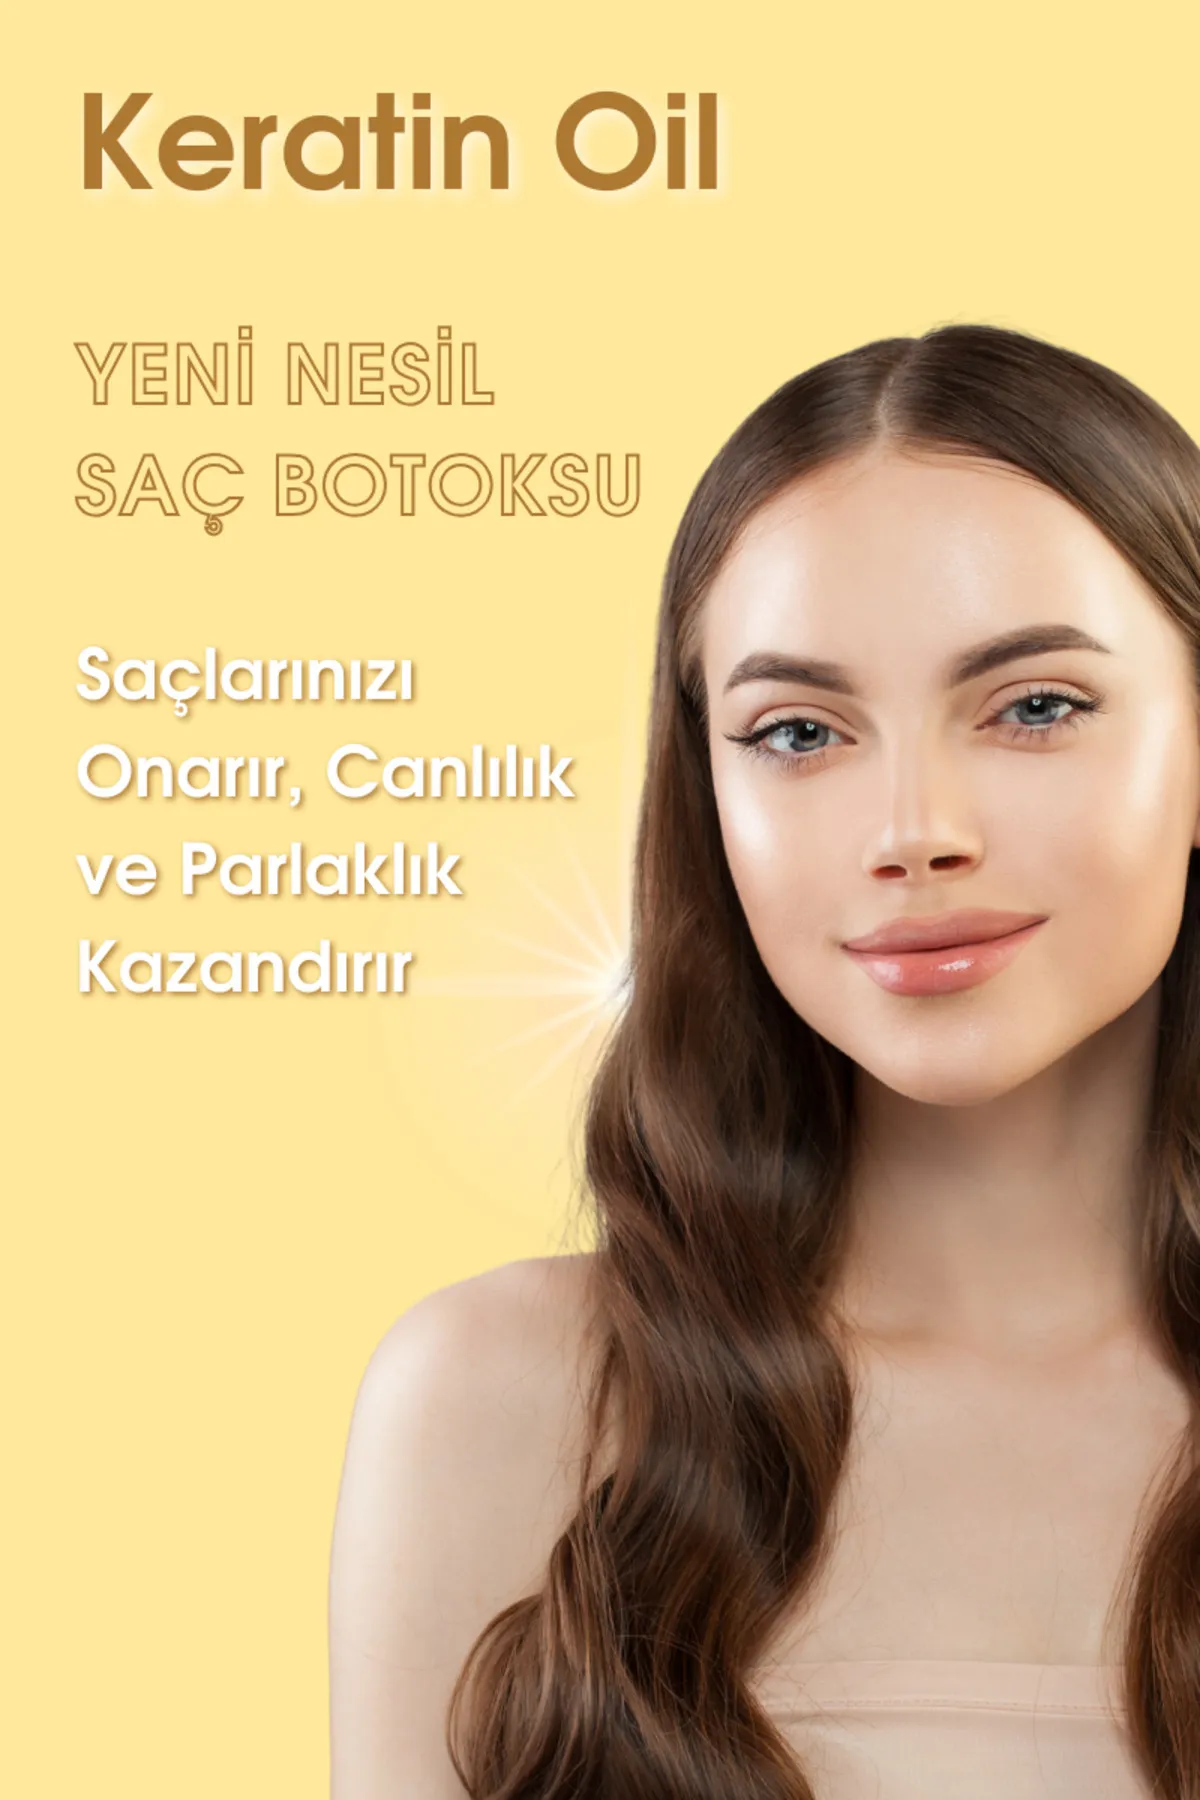 Yeşilmarka Saç Vitamini / Hair Vitamin - Keratin Oil & Royal Jelly - Thumbnail